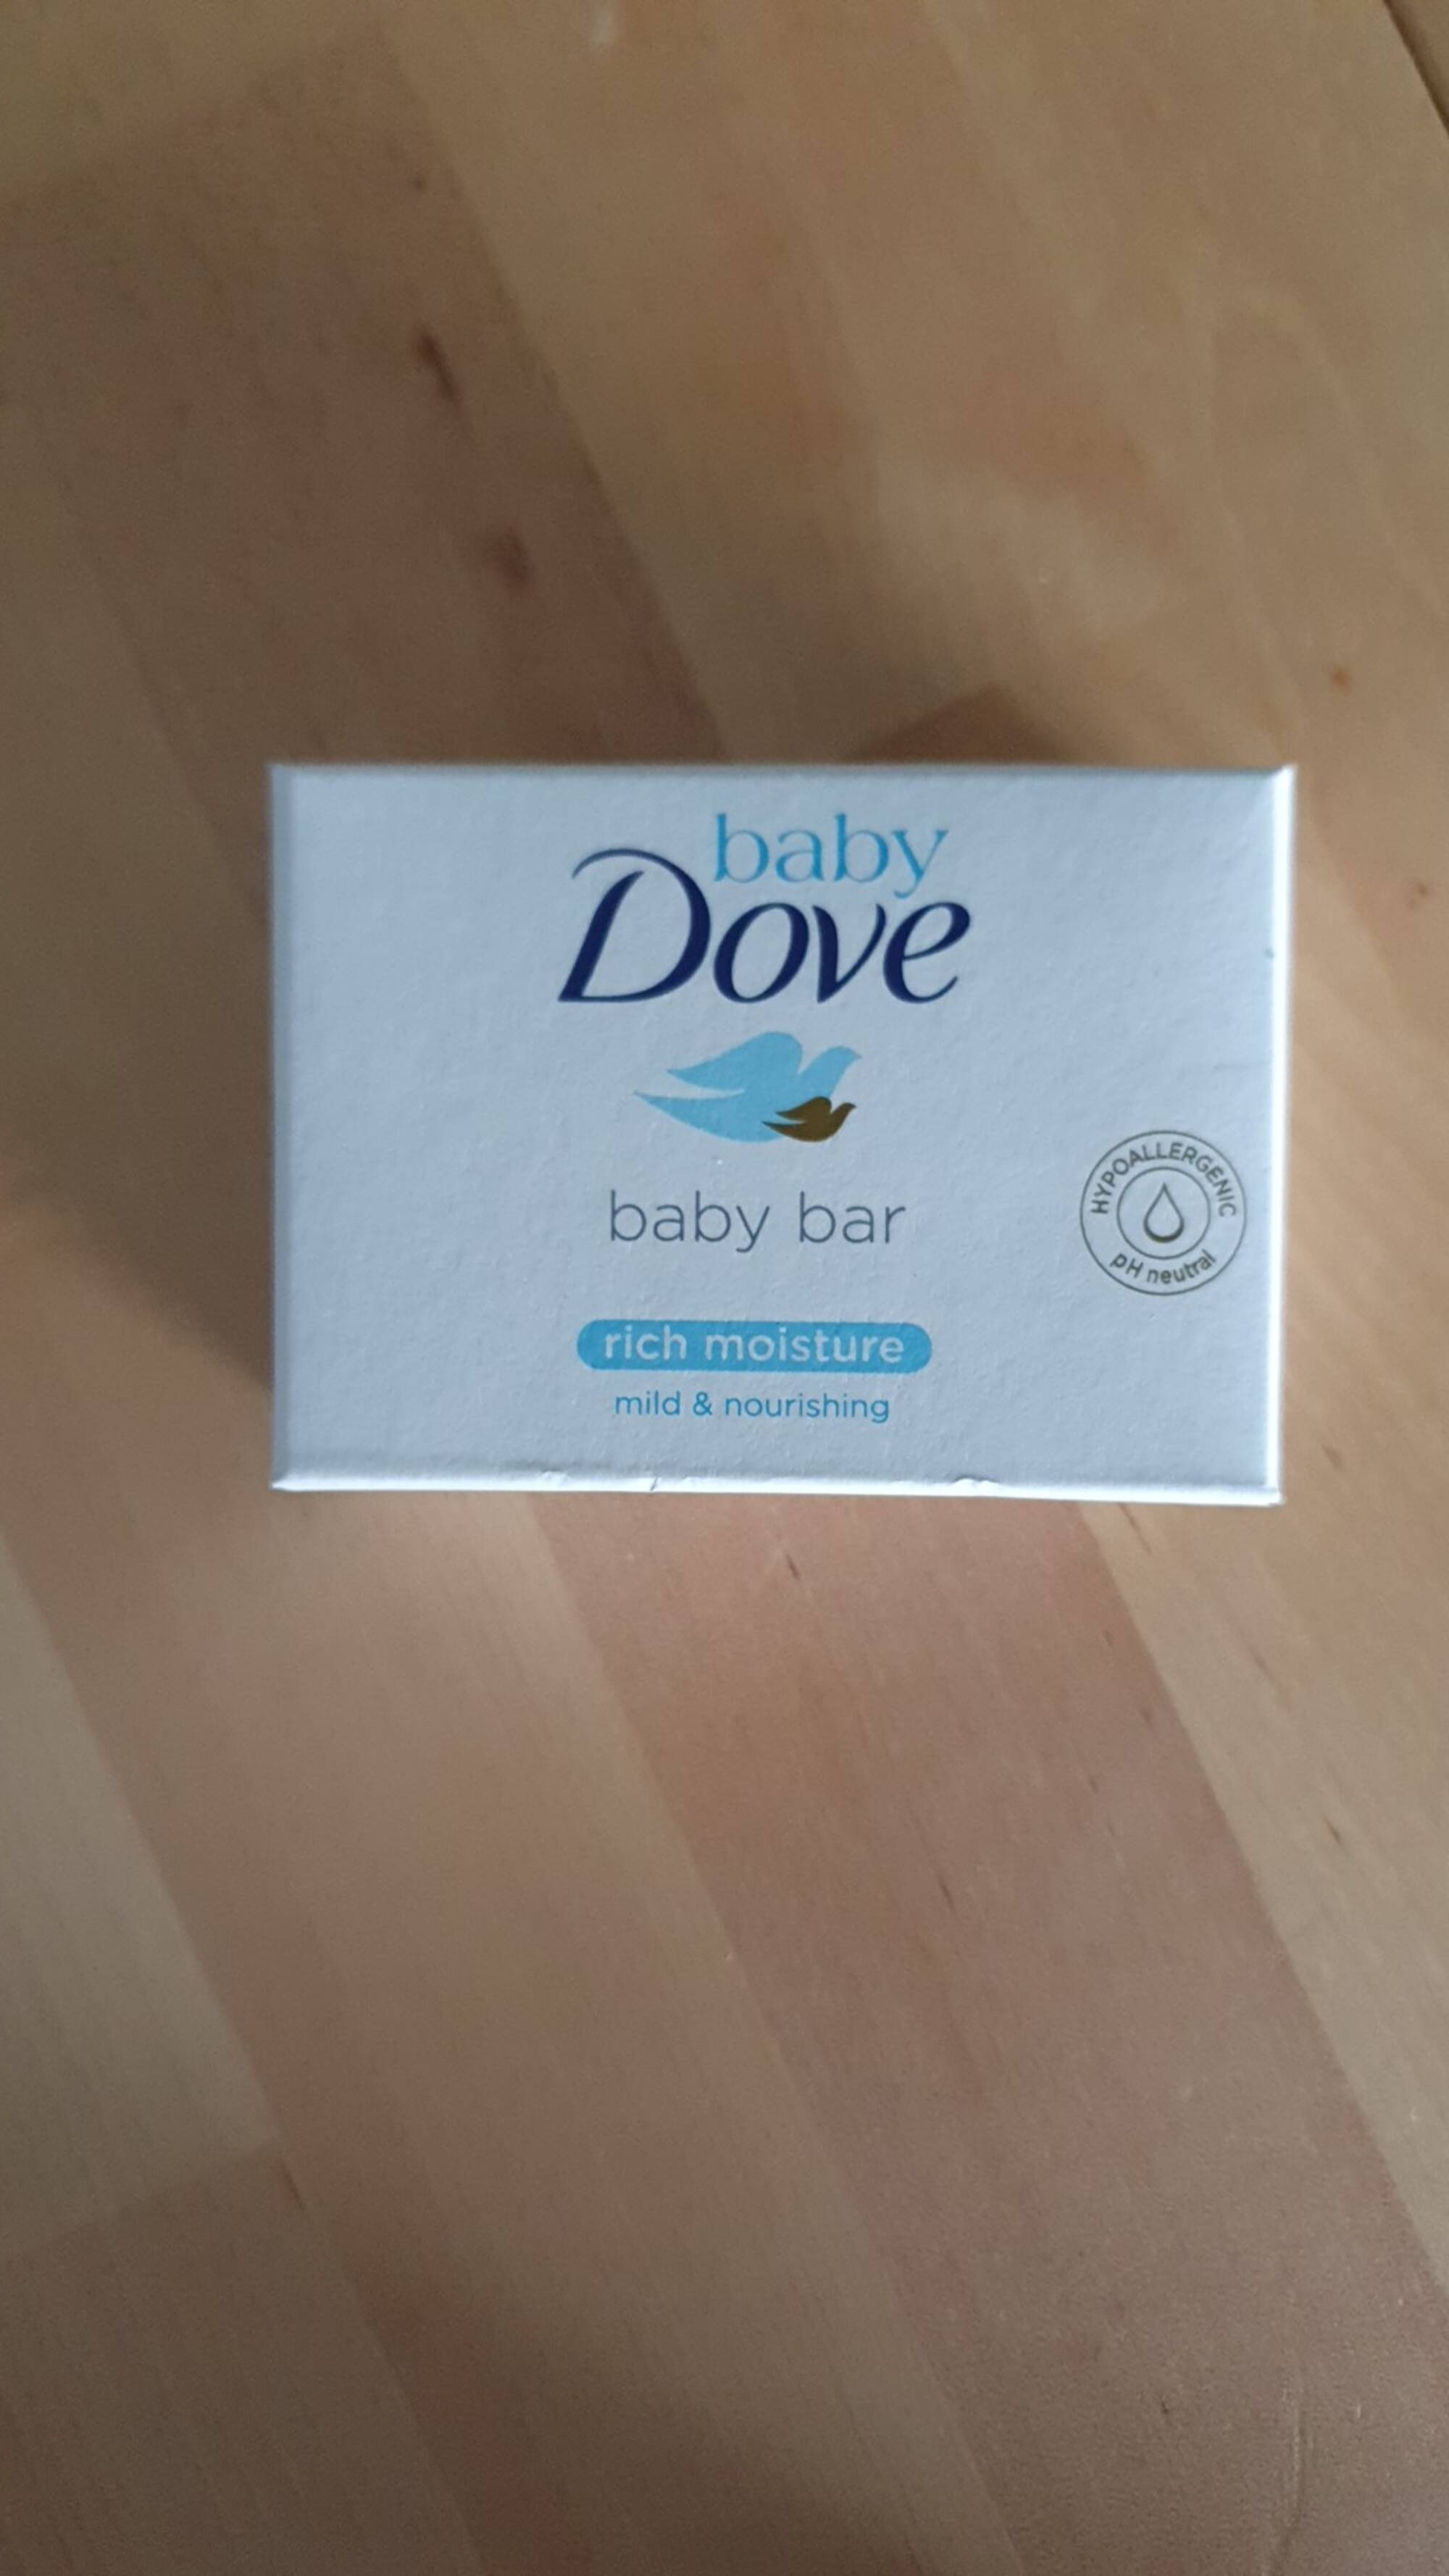 BABY DOVE - Baby bar rich moisture